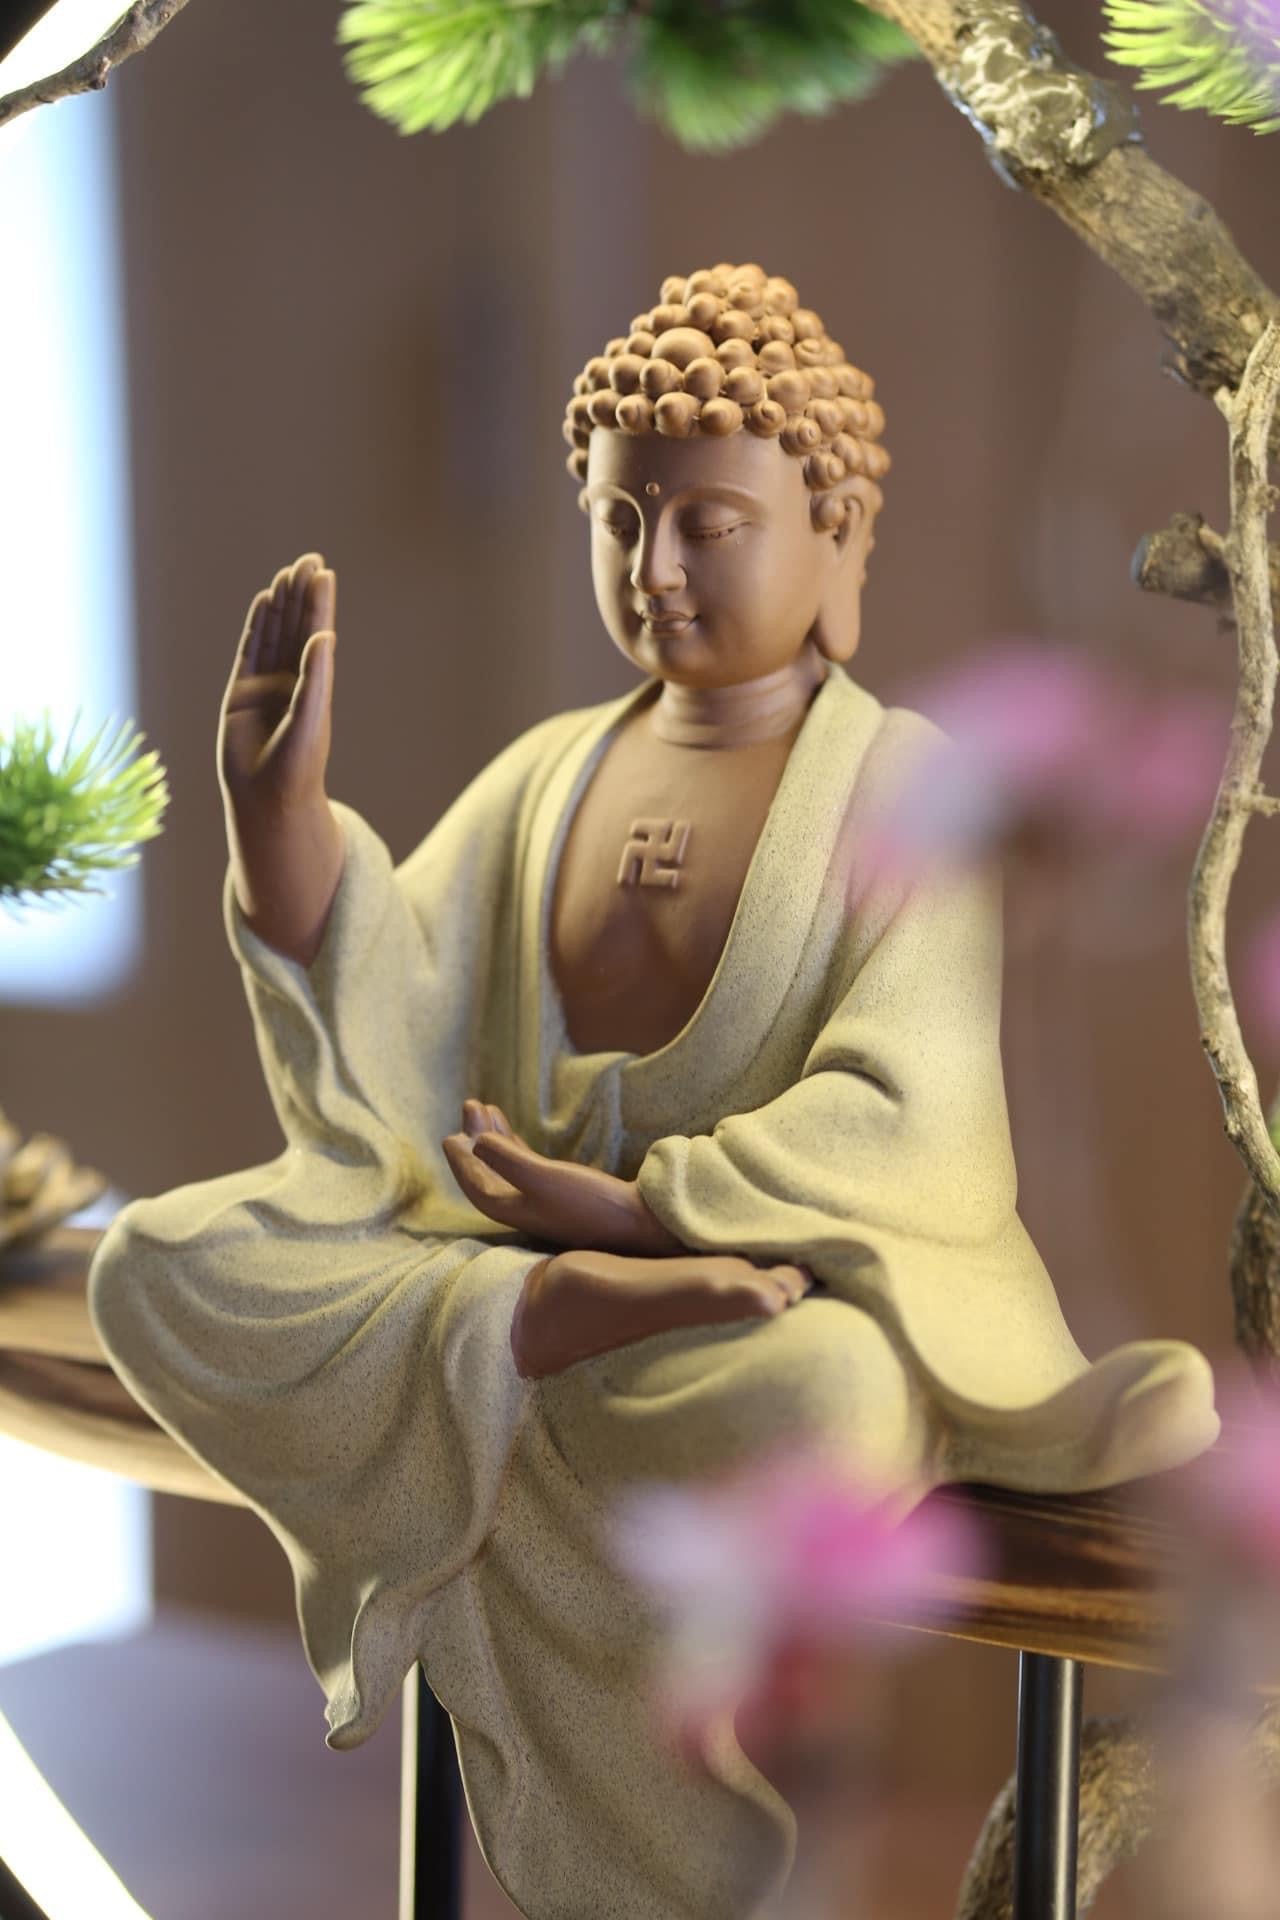 Phật Adida - size Trung